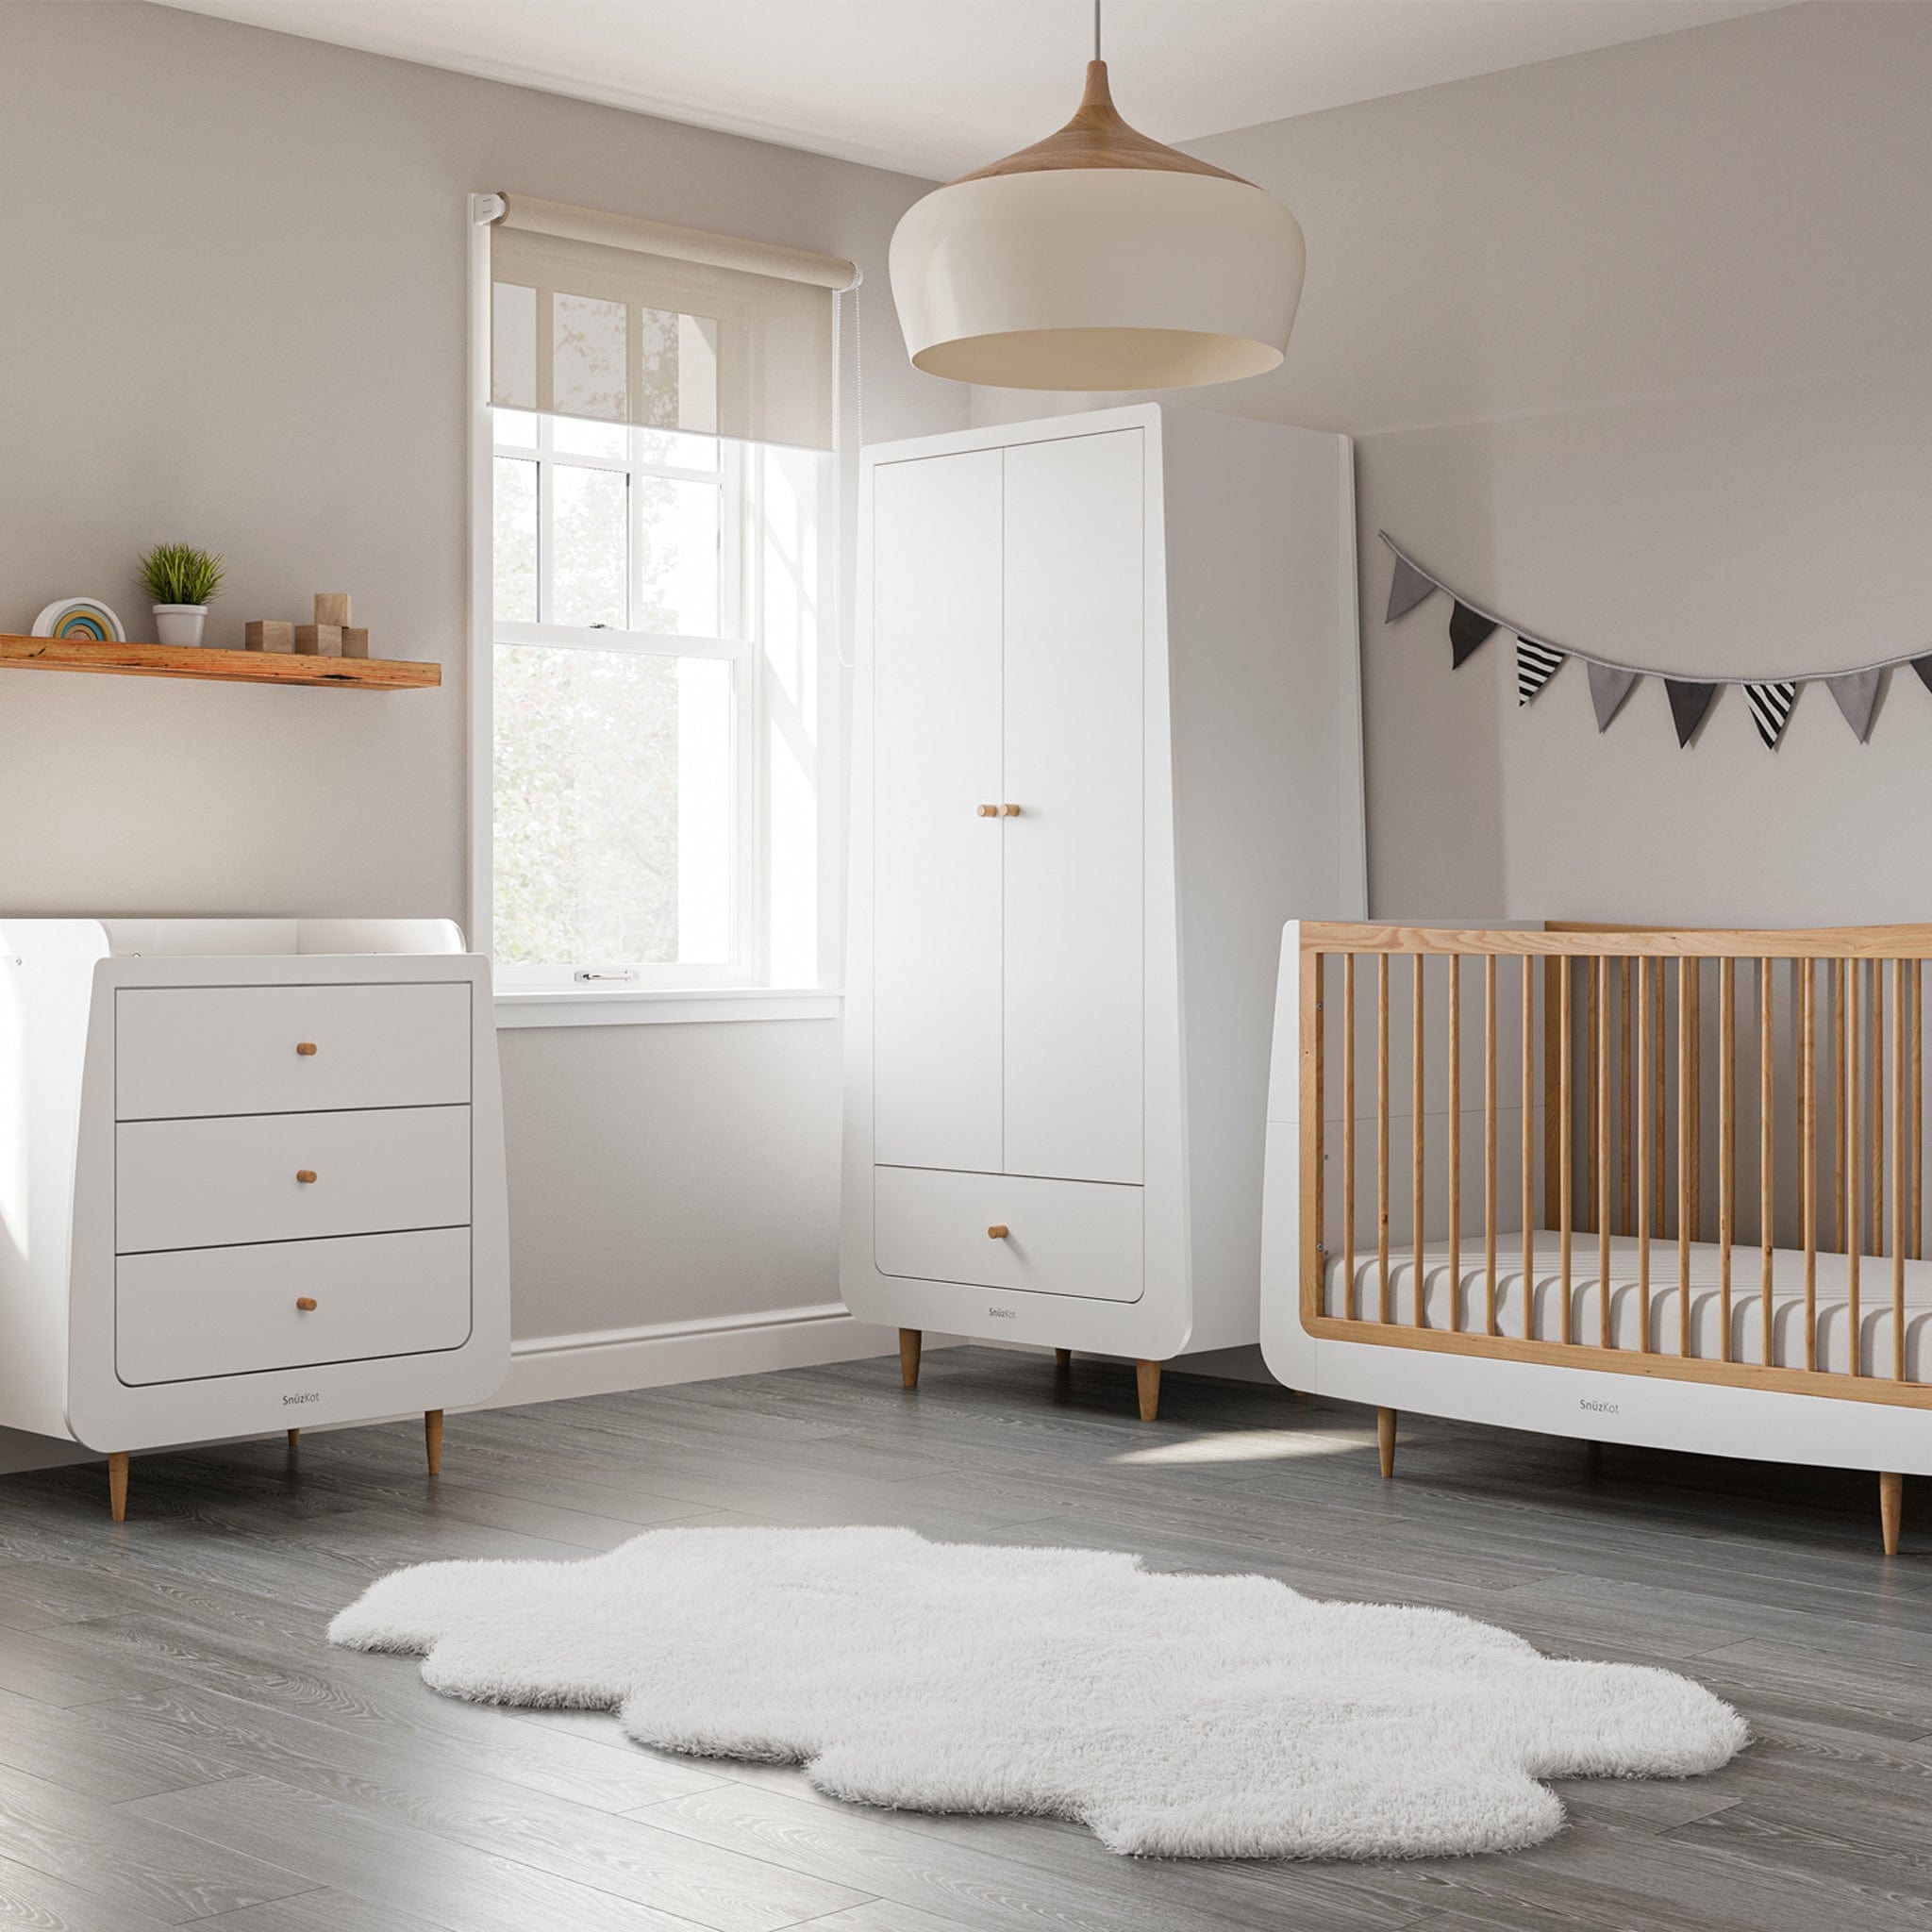 SnüzKot Skandi 3 Piece Nursery Furniture Set in Natural Nursery Room Sets 11304-SK-NAT 5060730242472